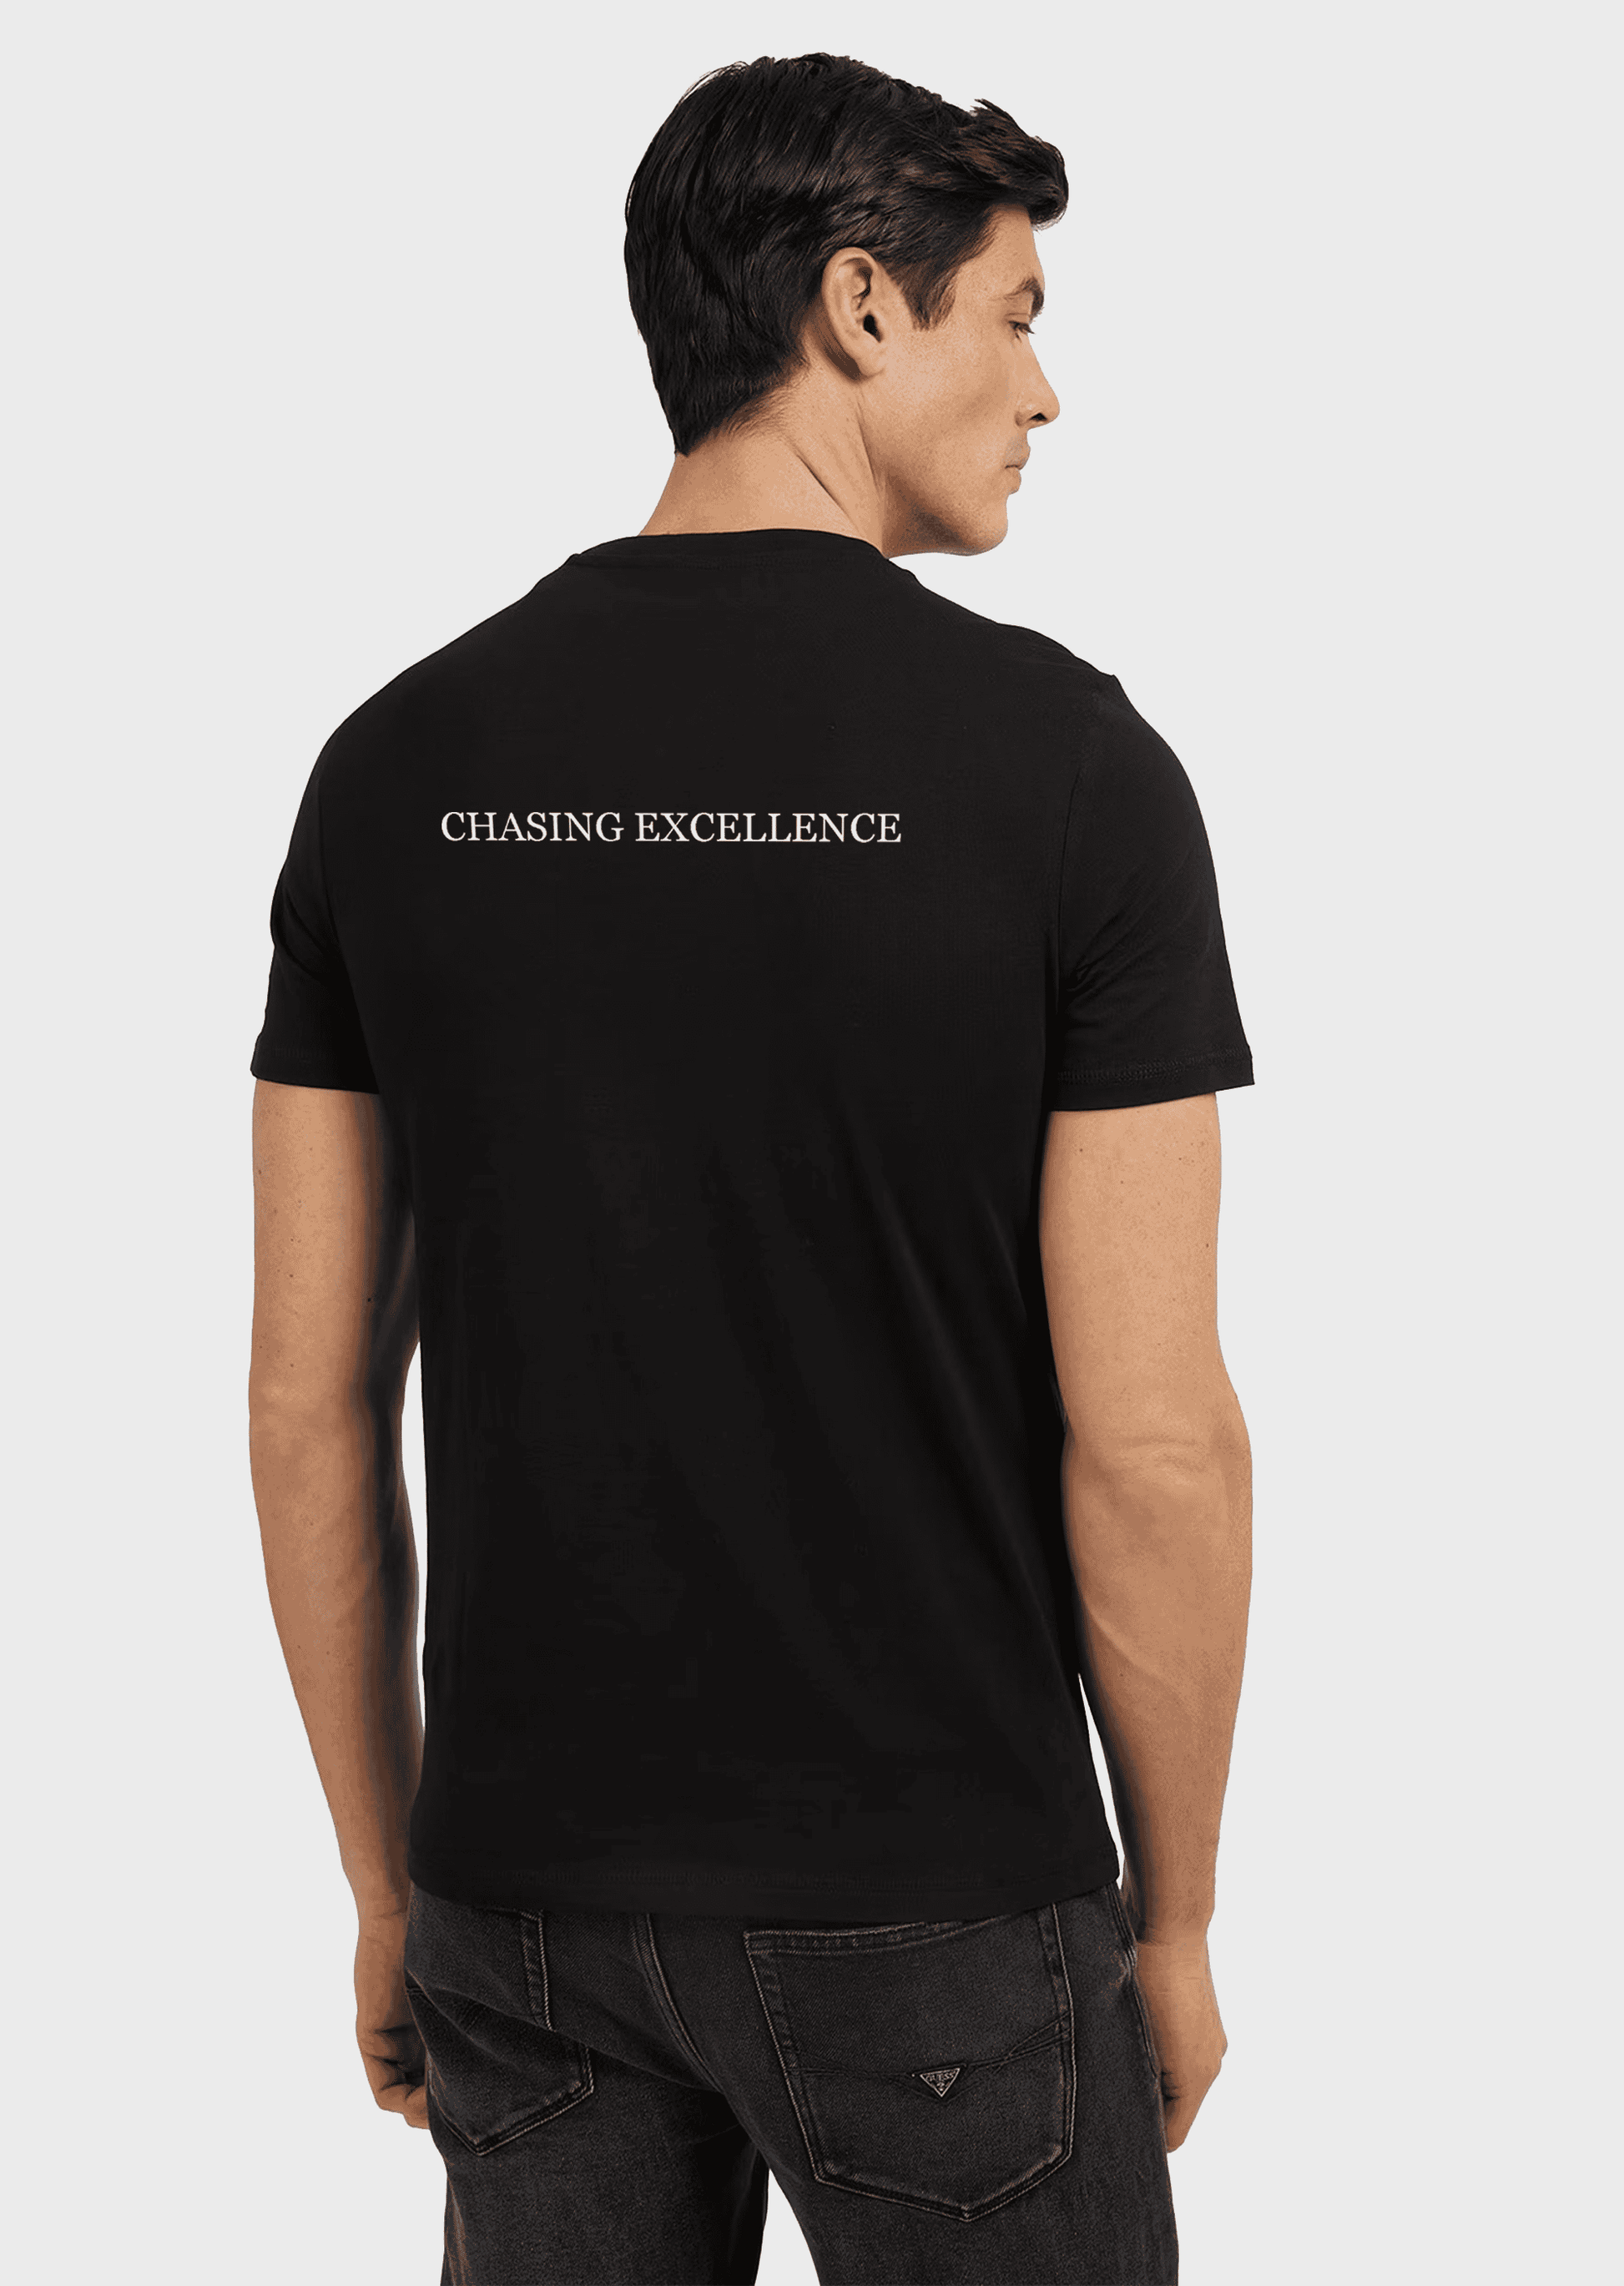 Apparel T-Shirt Store Virtus – The Virtus